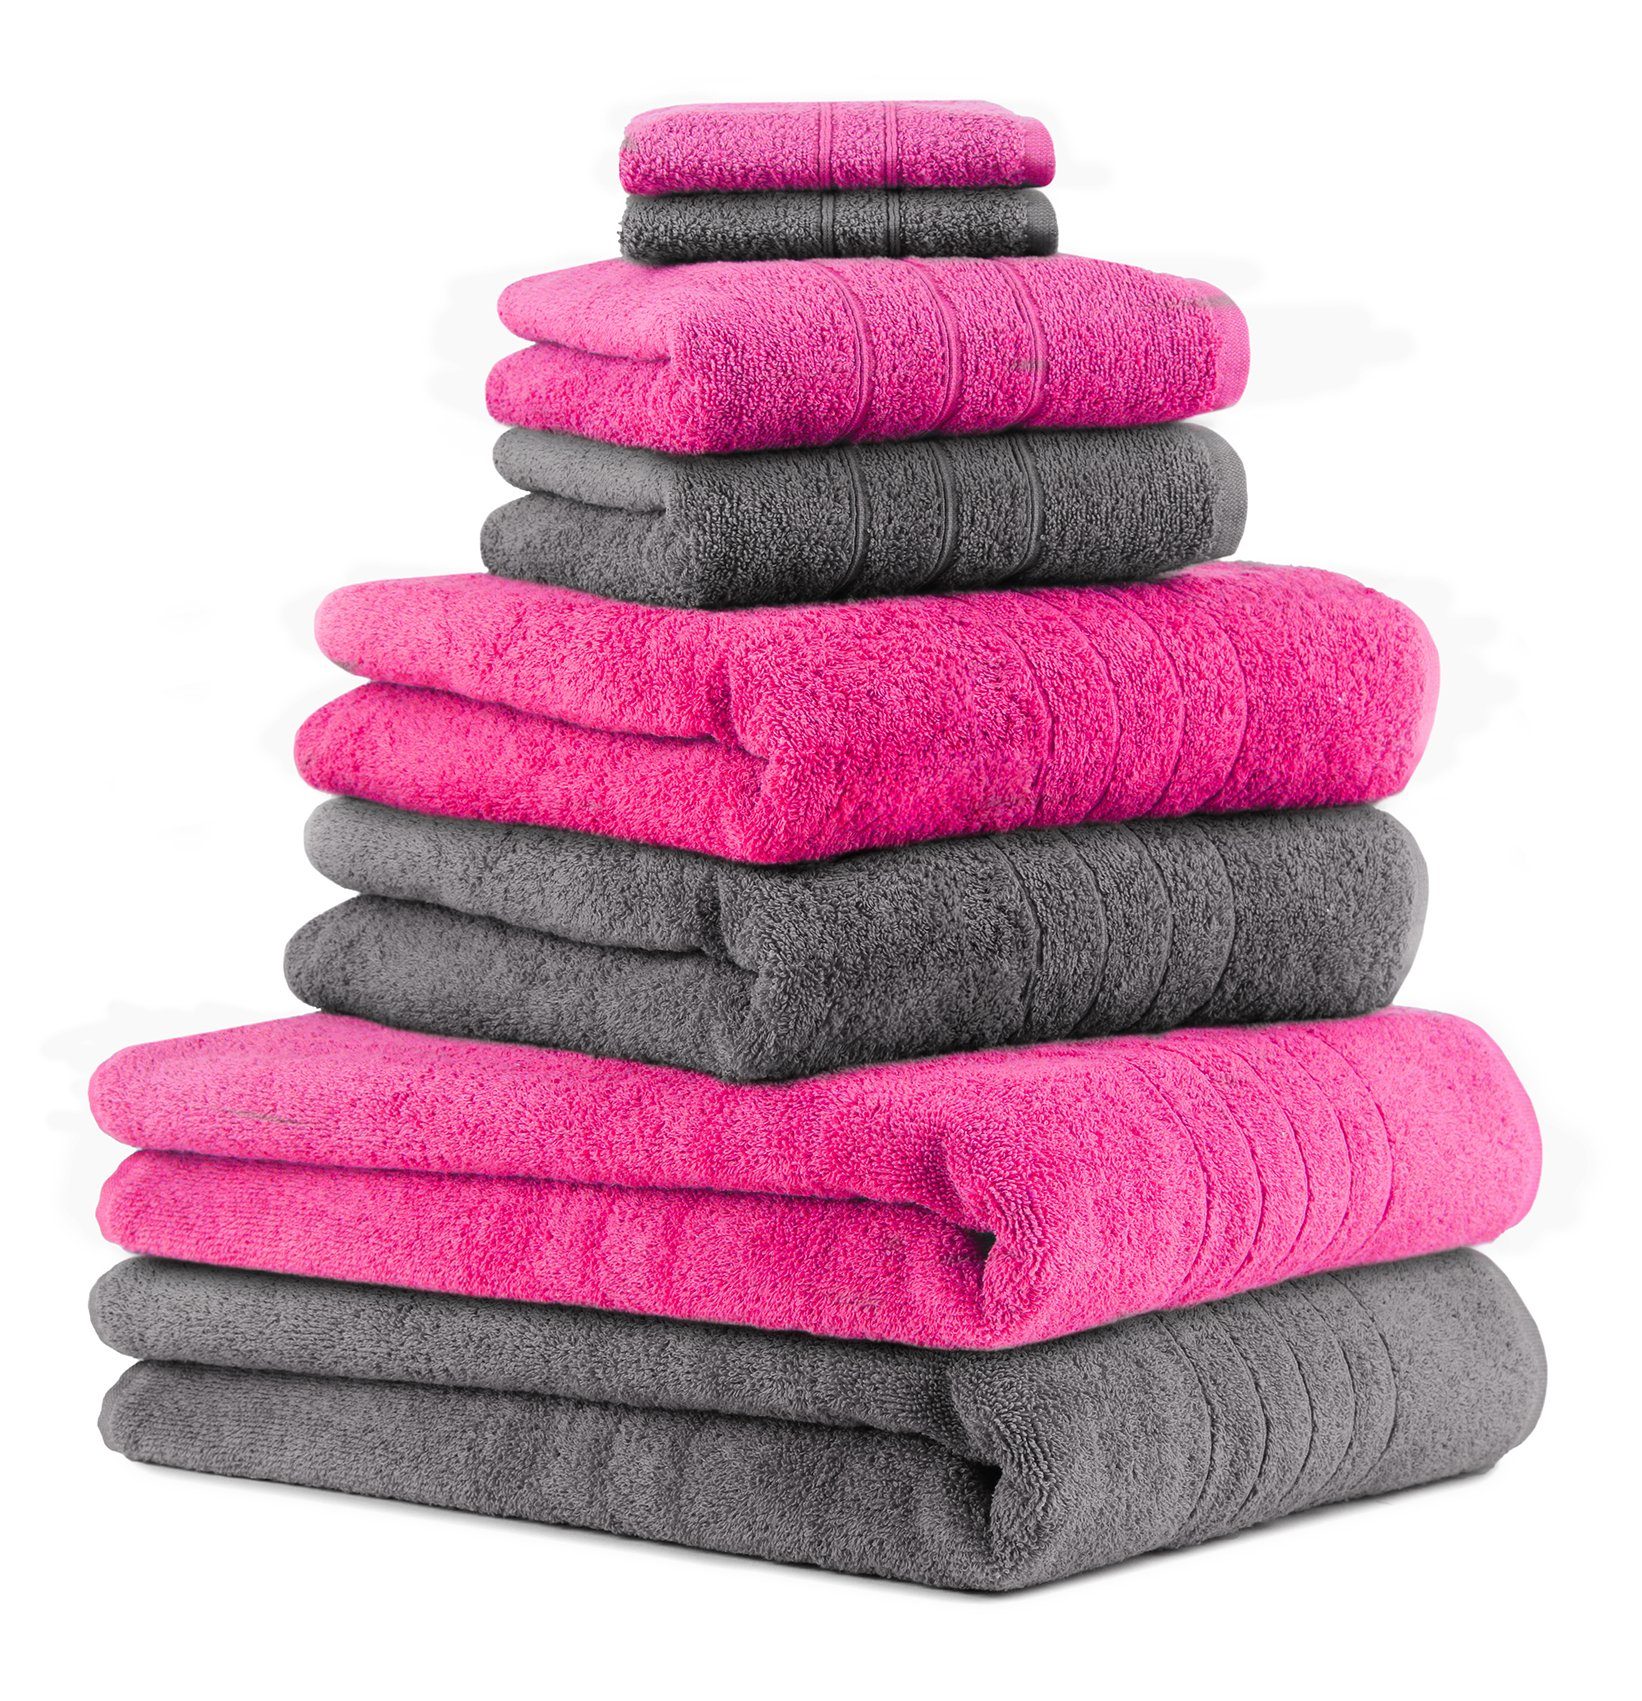 Betz Handtuch Set »8-TLG. Handtuch-Set Deluxe 100% Baumwolle 2 Badetücher 2  Duschtücher 2 Handtücher 2 Seiftücher Farbe anthrazit grau und Fuchsia«,  100% Baumwolle, (8-tlg)